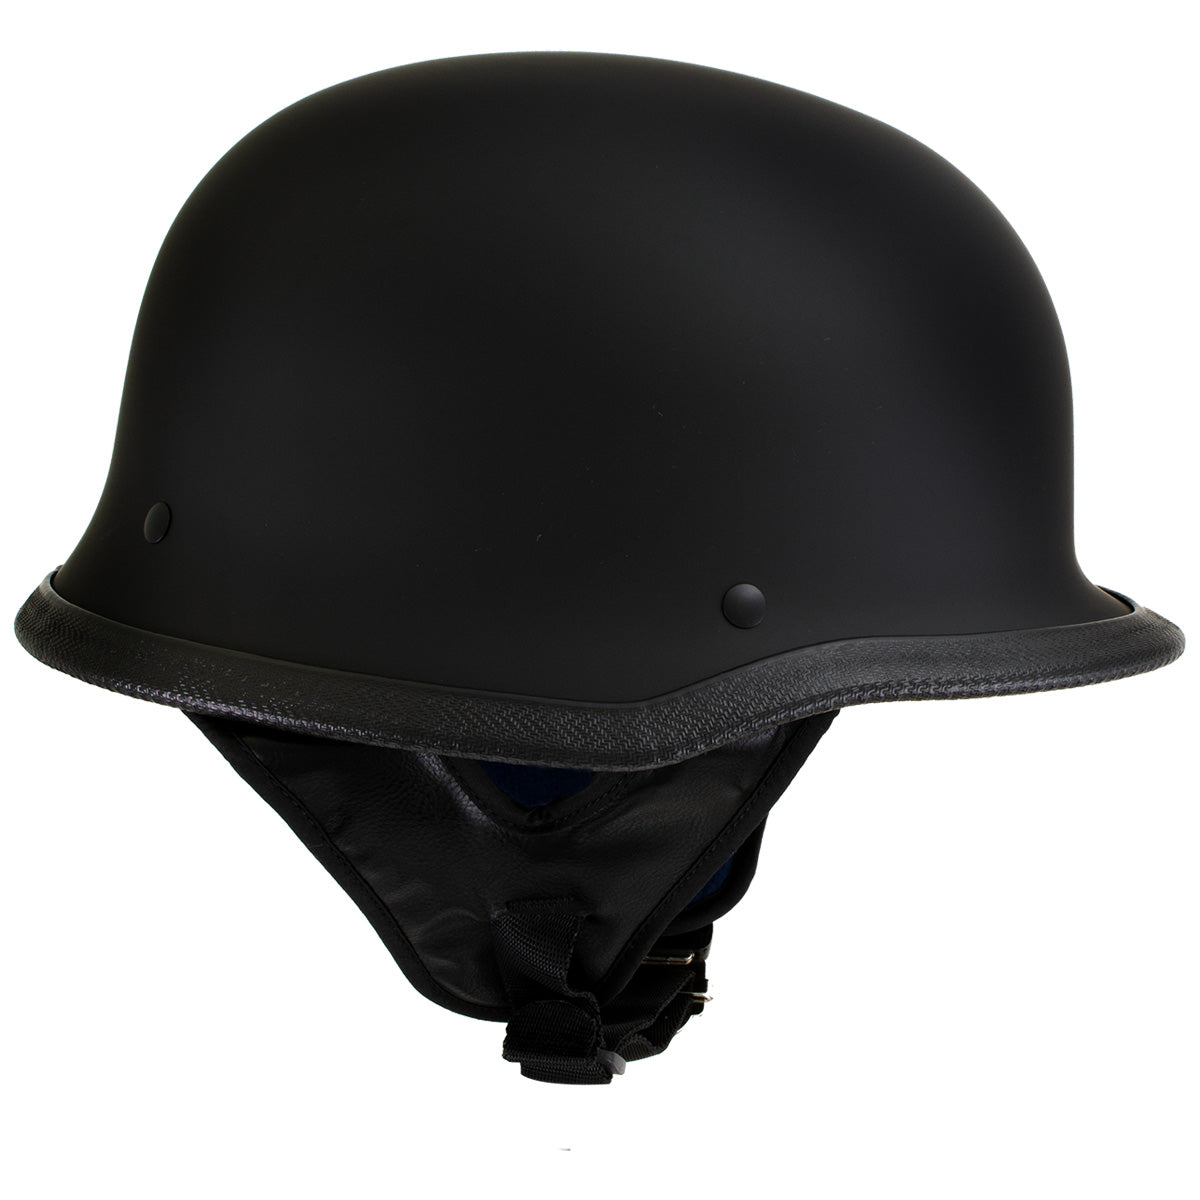 Outlaw T-75 'The Hanz' German Style Flat Black Advanced Motorcycle Half Helmet